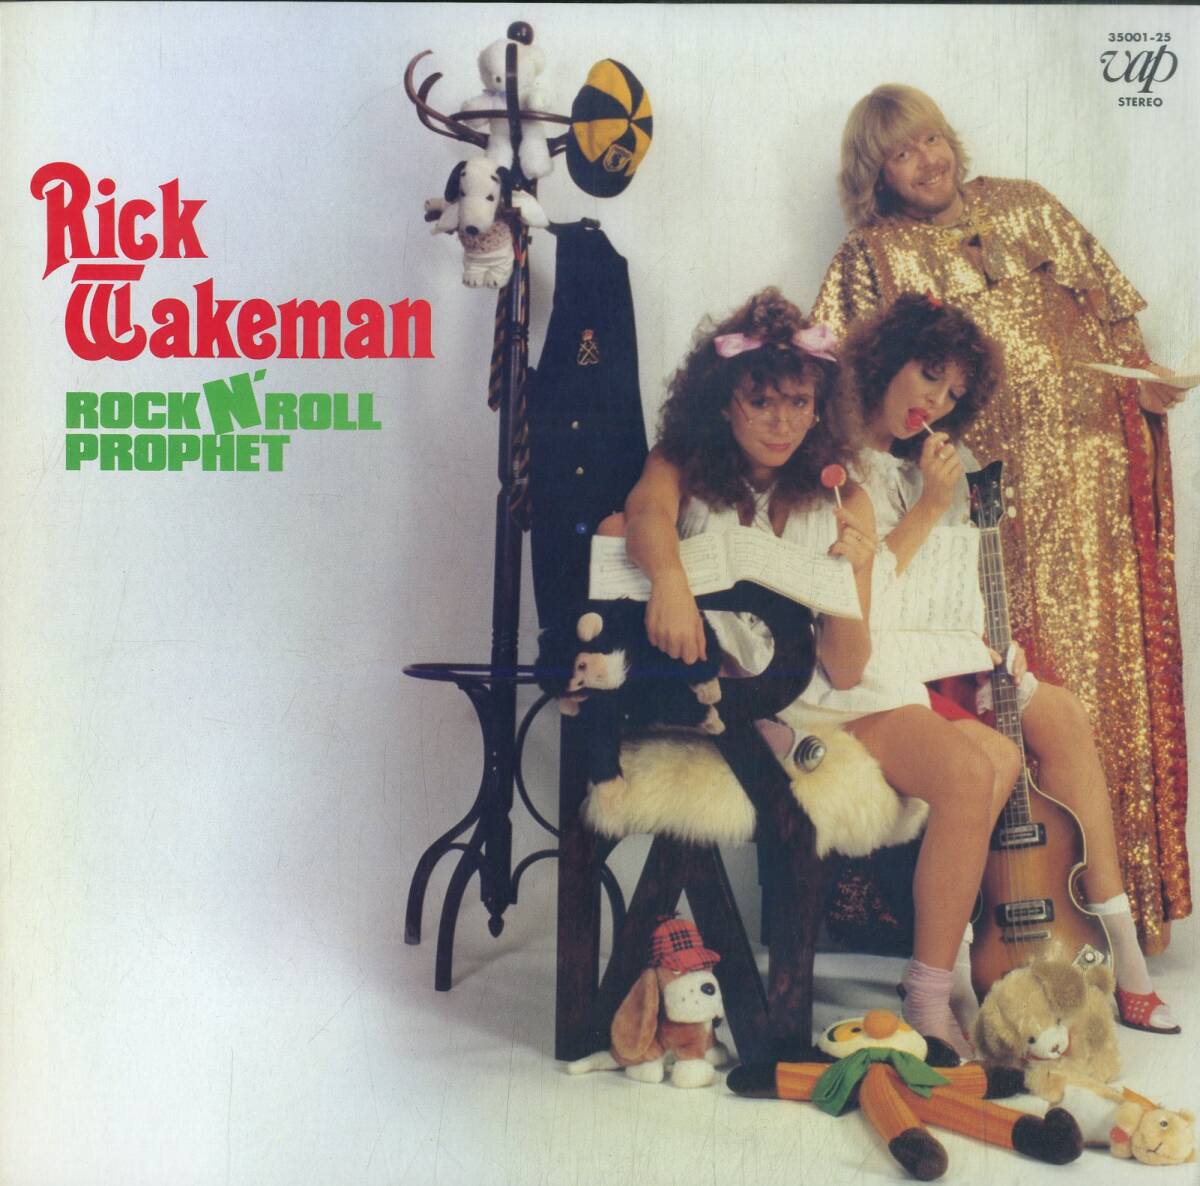 A00594026/LP/リック・ウエイクマン (RICK WAKEMAN・イエス・YES)「Rock N Roll Prophet (1982年・35001-25・プログレ)」_画像1